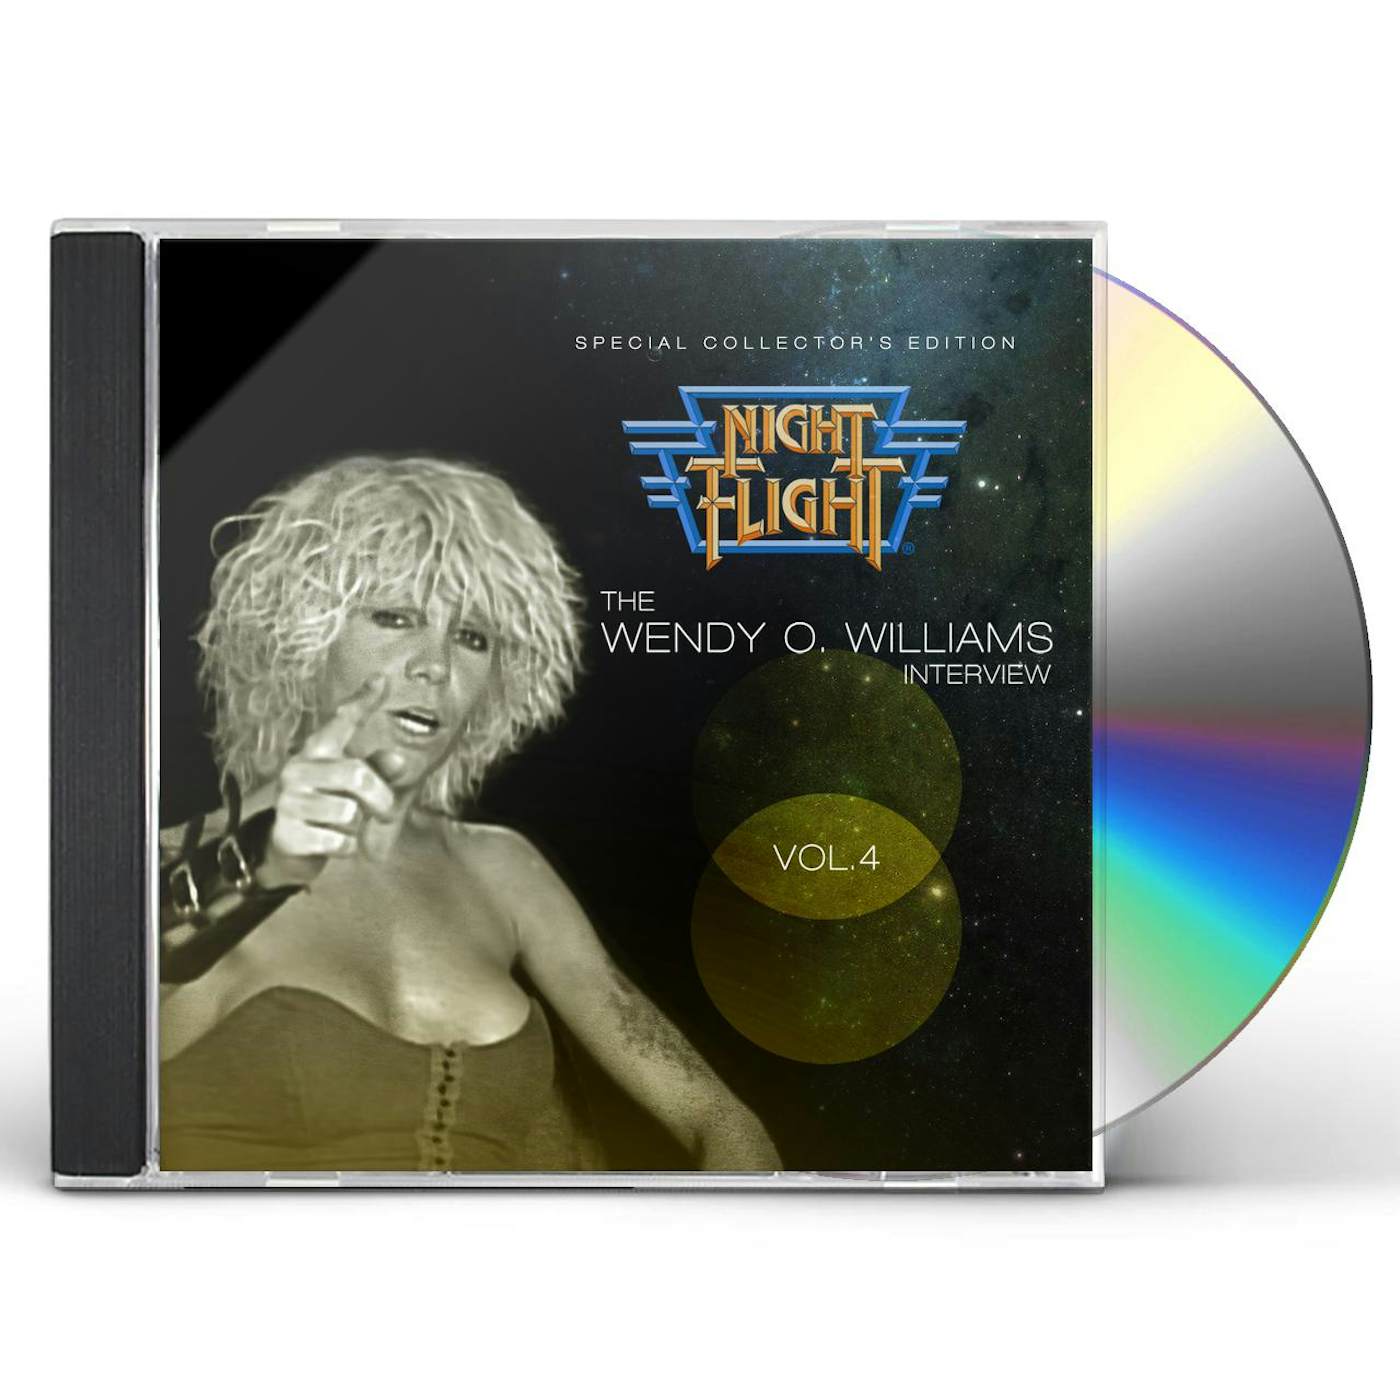 Wendy O. Williams NIGHT FLIGHT INTERVIEW CD